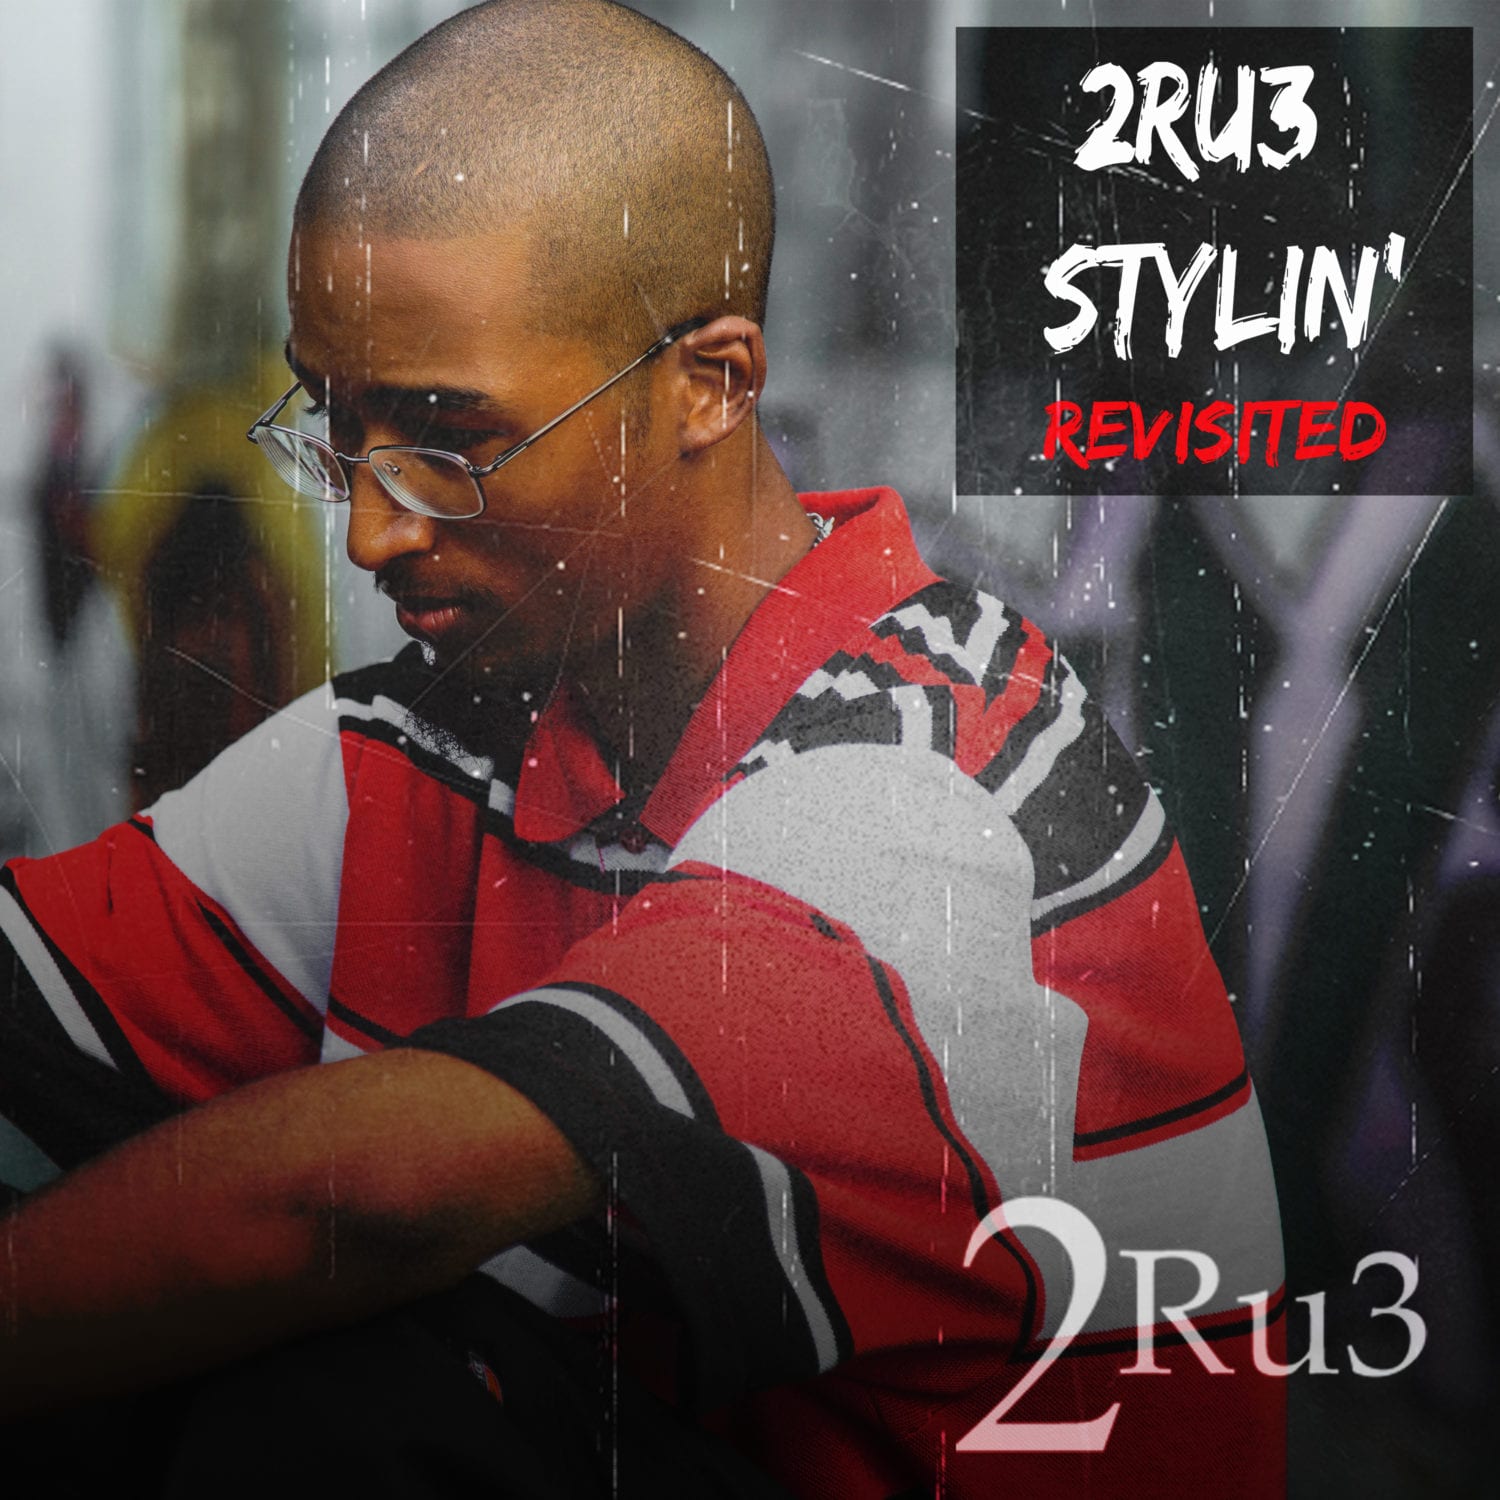 New Mixtape By 2RU3 - 2Ru3 Stylin' (Revisited)